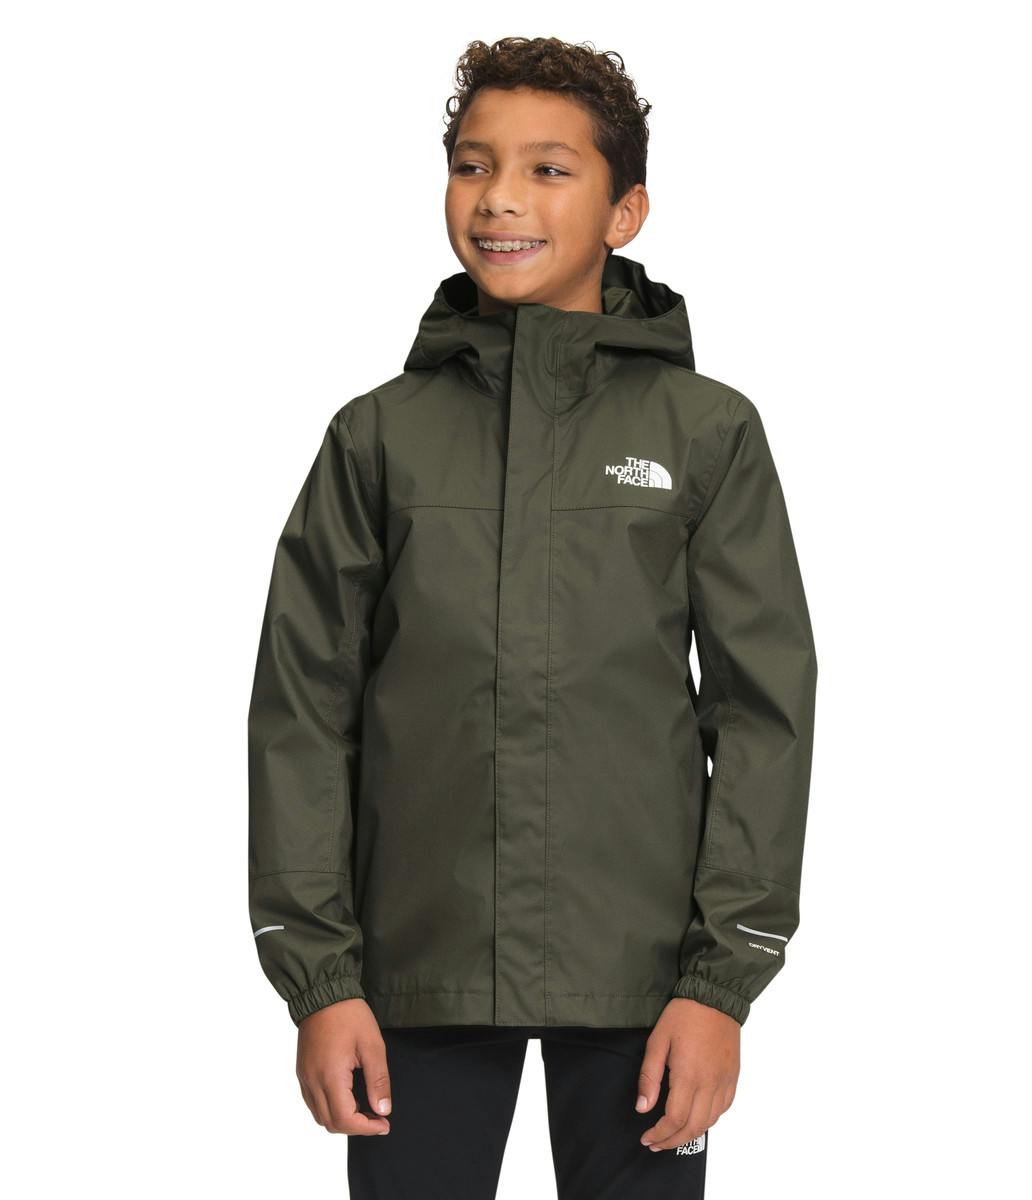 The North Face Boy's Antora Rain Jacket